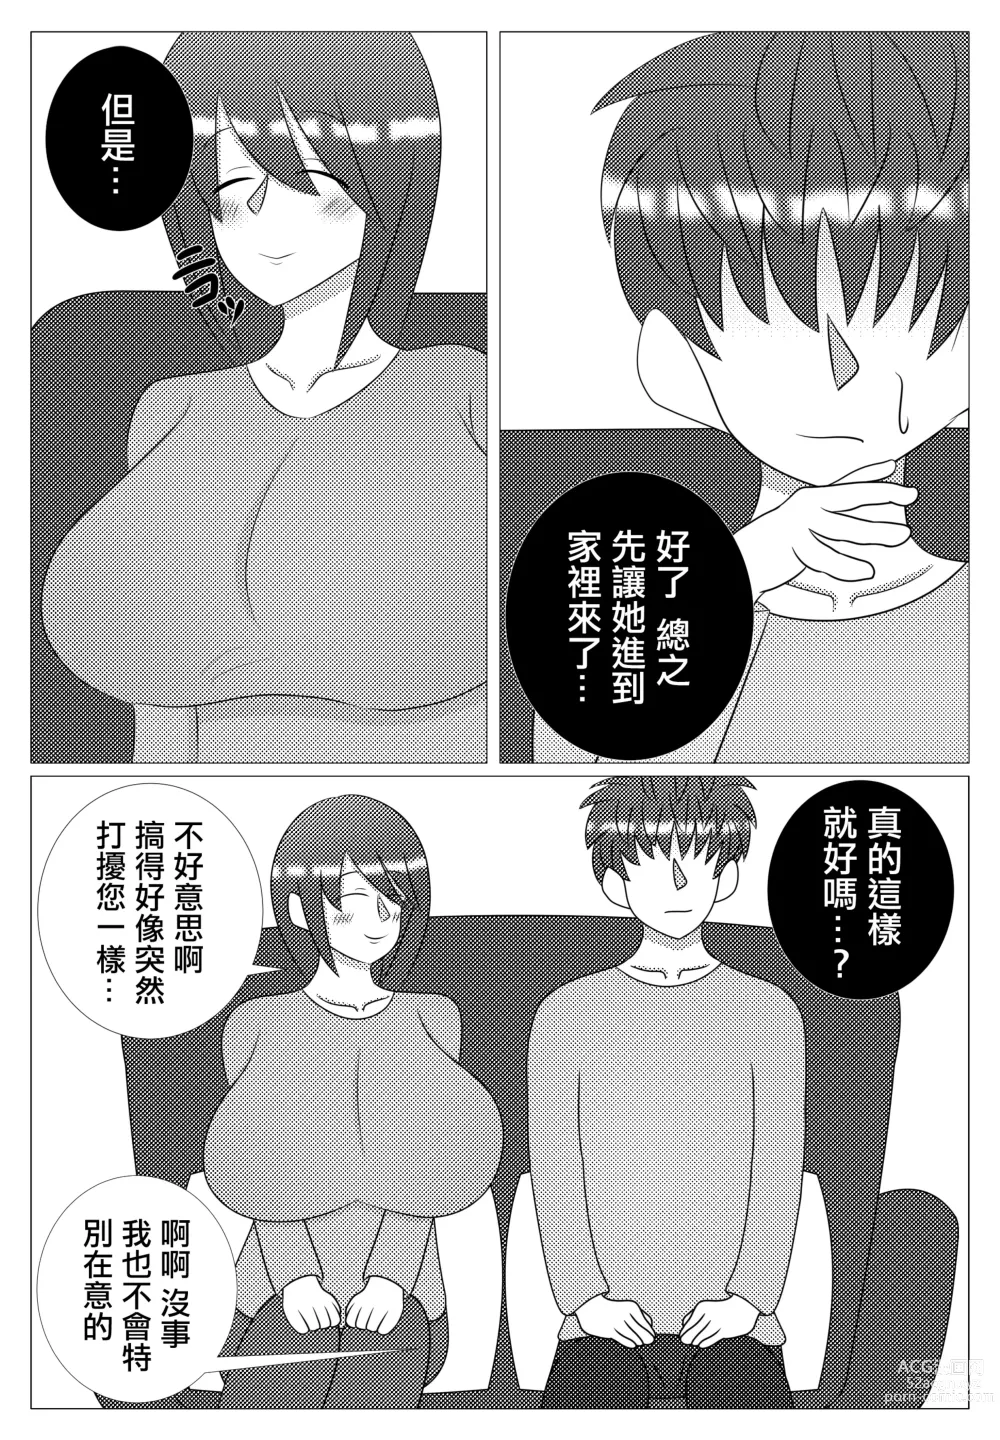 Page 7 of doujinshi 隔壁年輕太太真好搞定